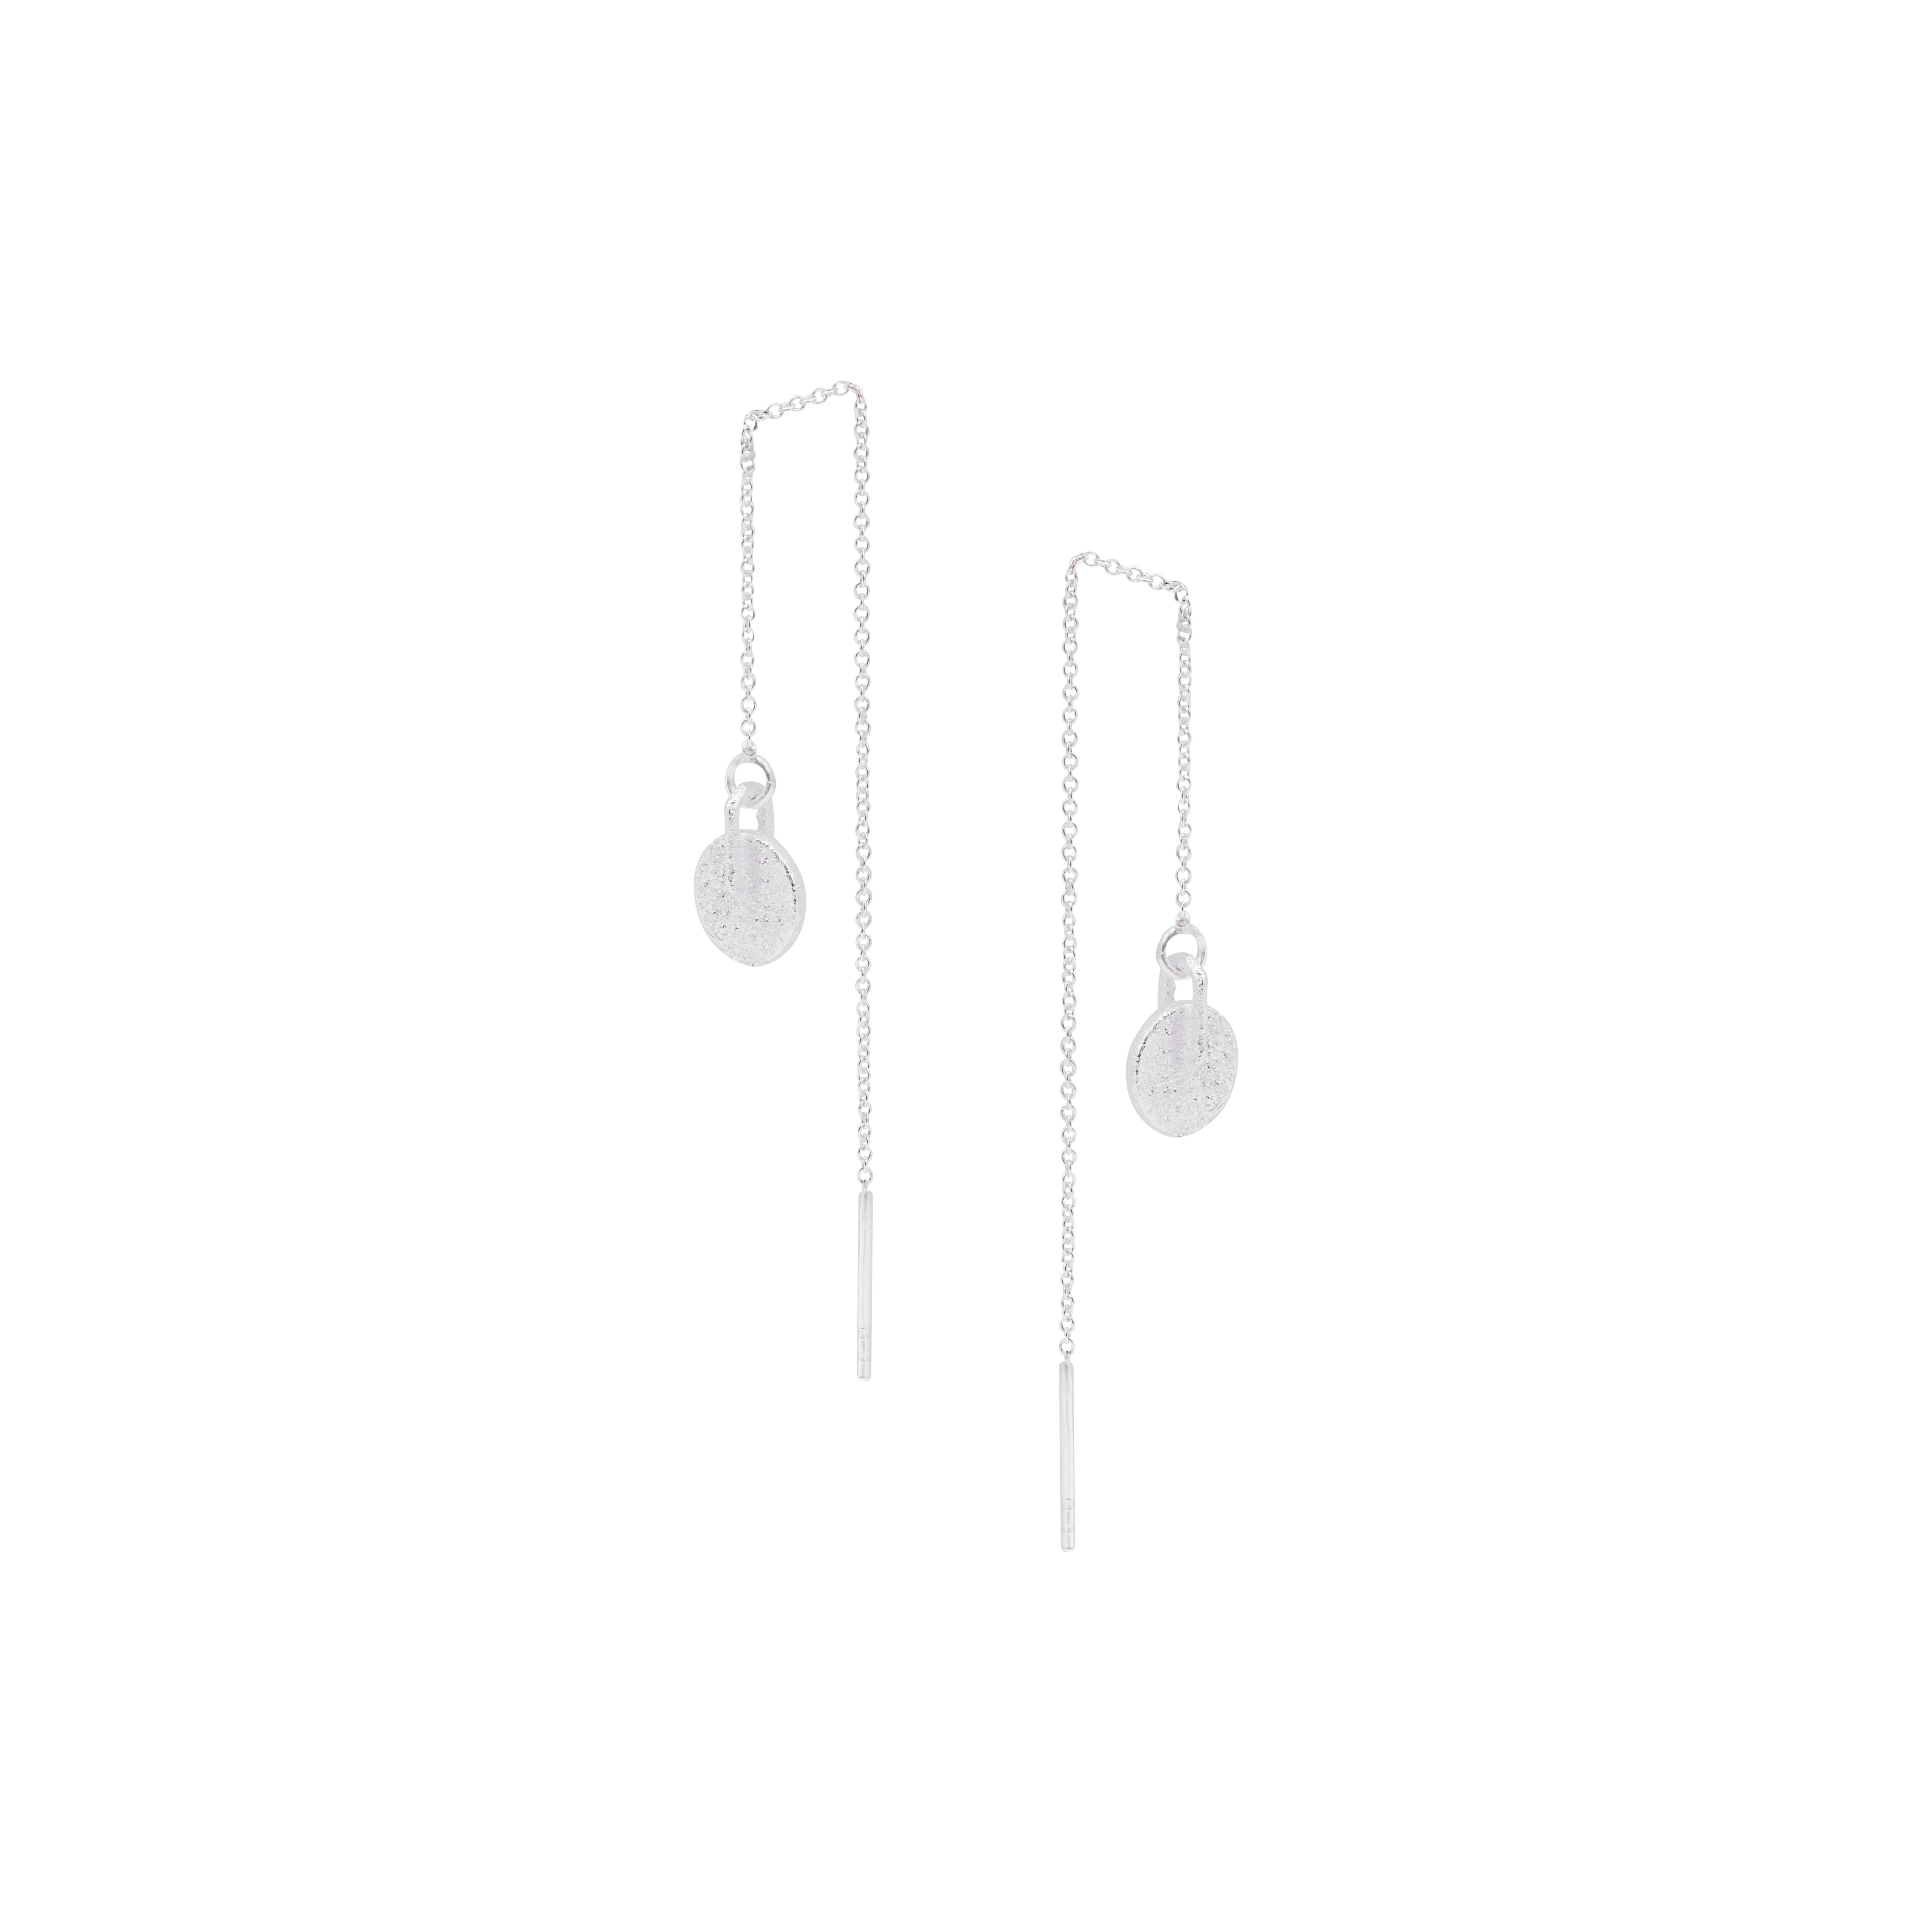 Bauhaus Disc Earring I - OLA | 3d printed jewelry